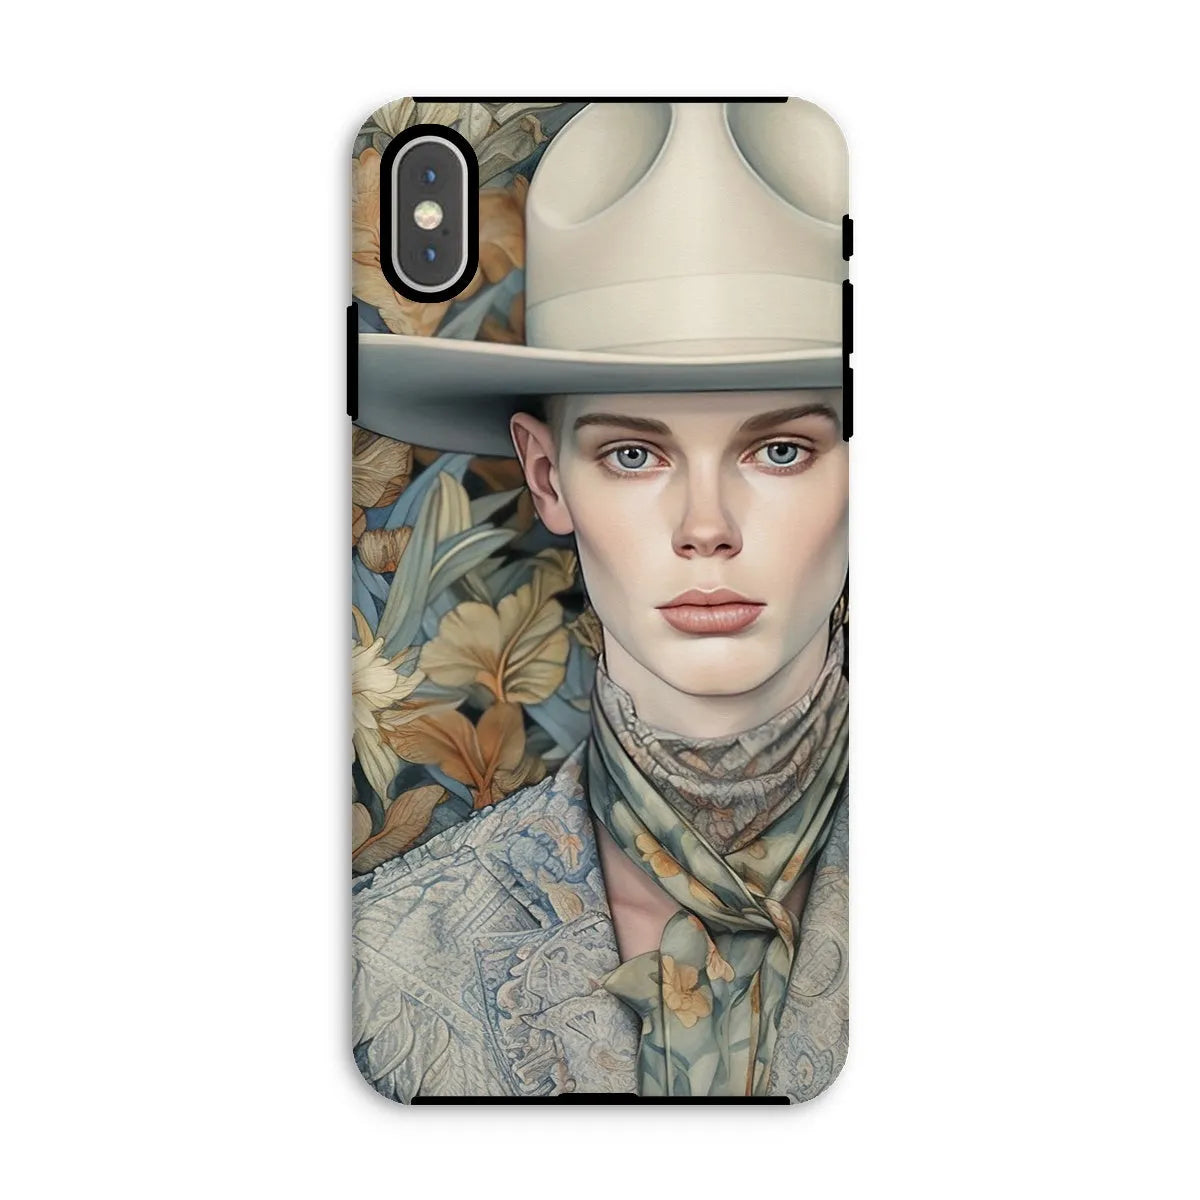 Jasper - Dandy Twink Cowboy Aesthetic Art Phone Case - Iphone Xs Max / Matte - Mobile Phone Cases - Aesthetic Art